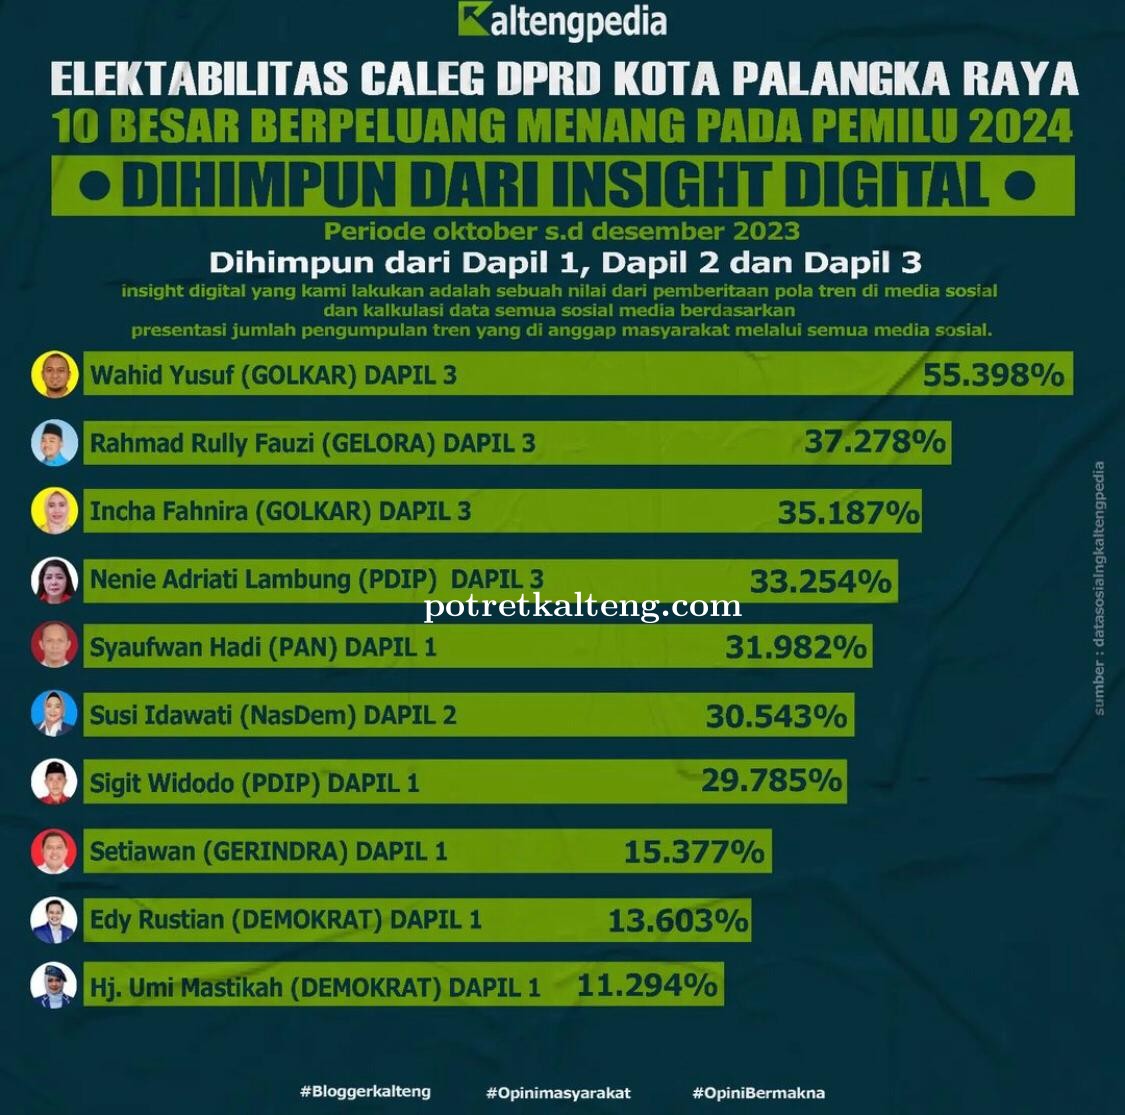 Pendatang Baru Caleg DPRD Kota Palangka Raya di Dapil 3 Punya Elektabilitas Tinggi